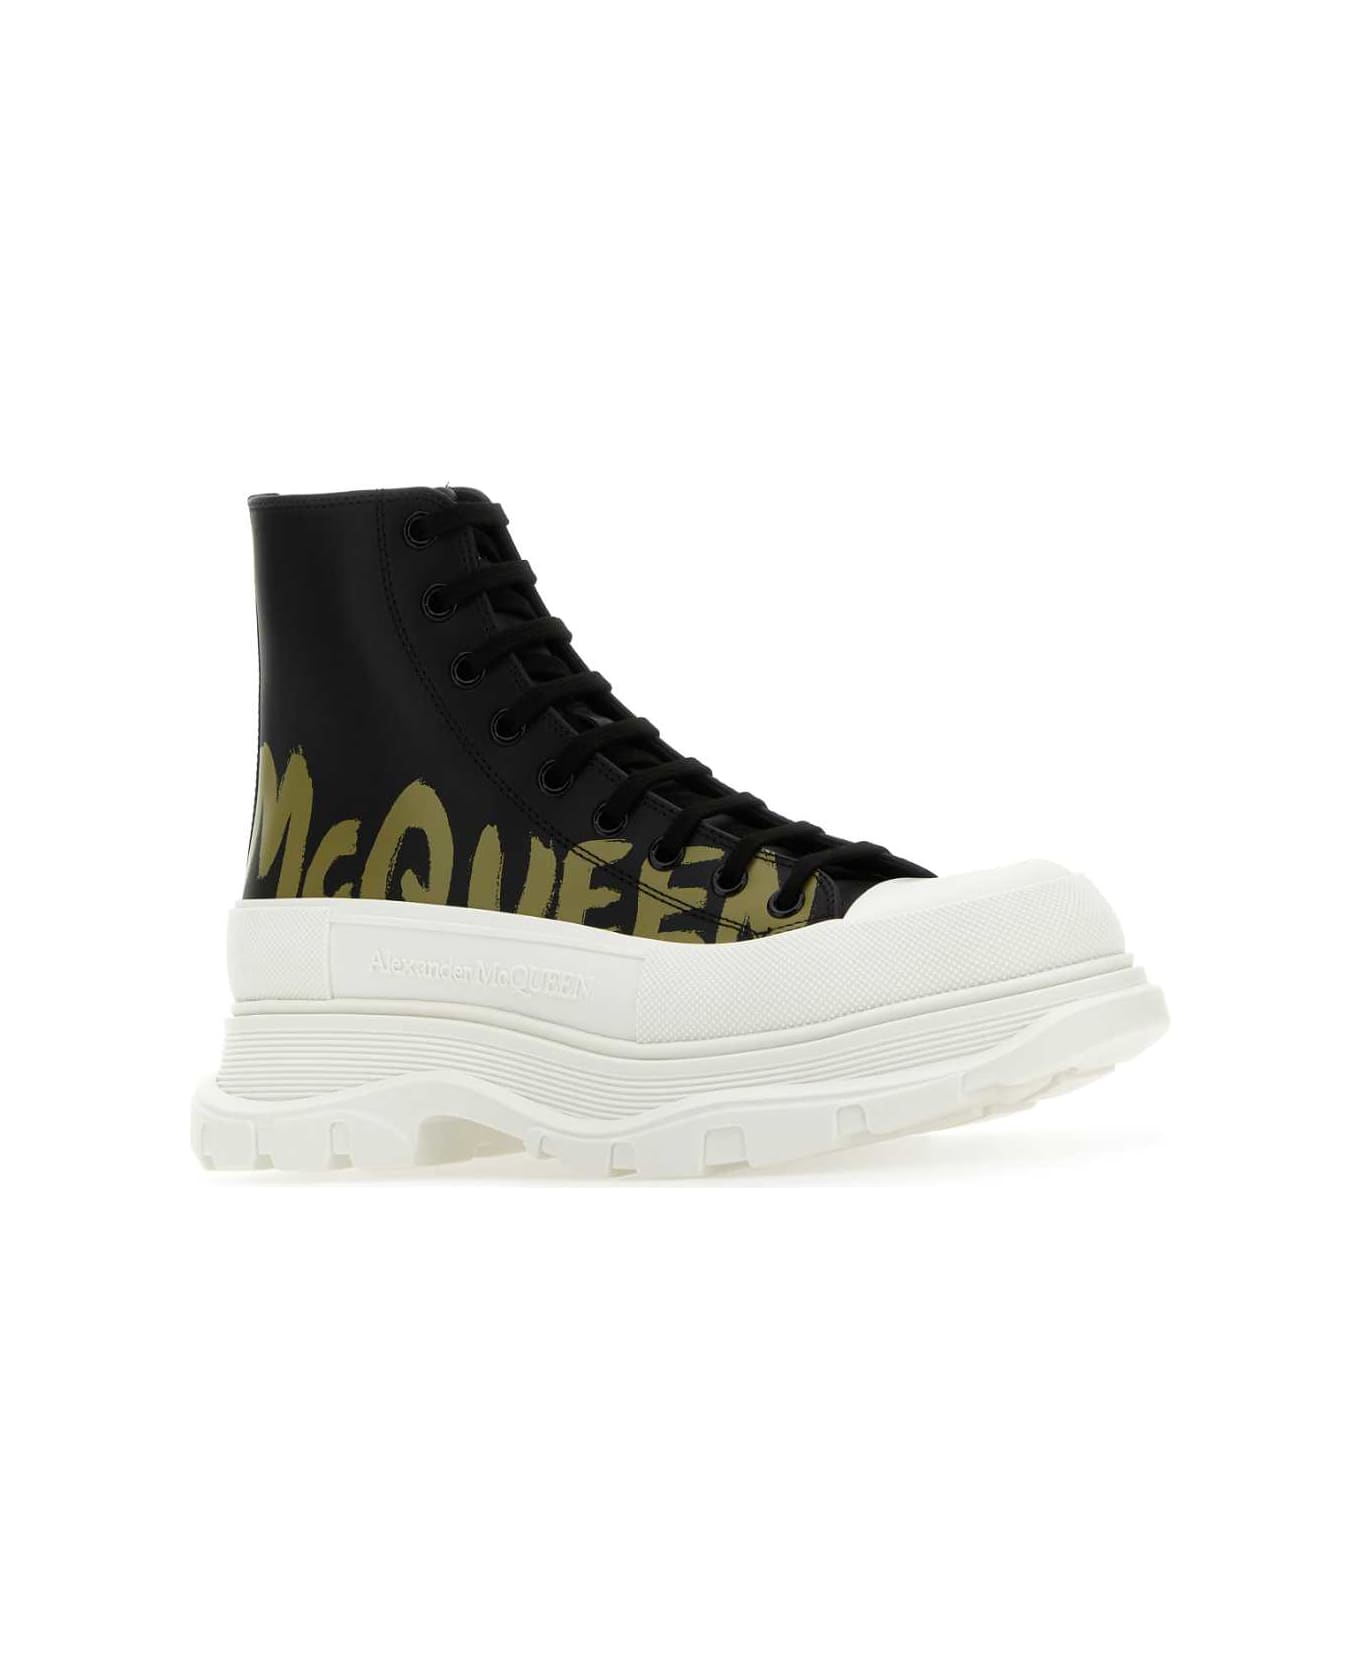 Alexander McQueen Black Leather Tread Slick Sneakers - BLKOFWHPALEKHAKI スニーカー